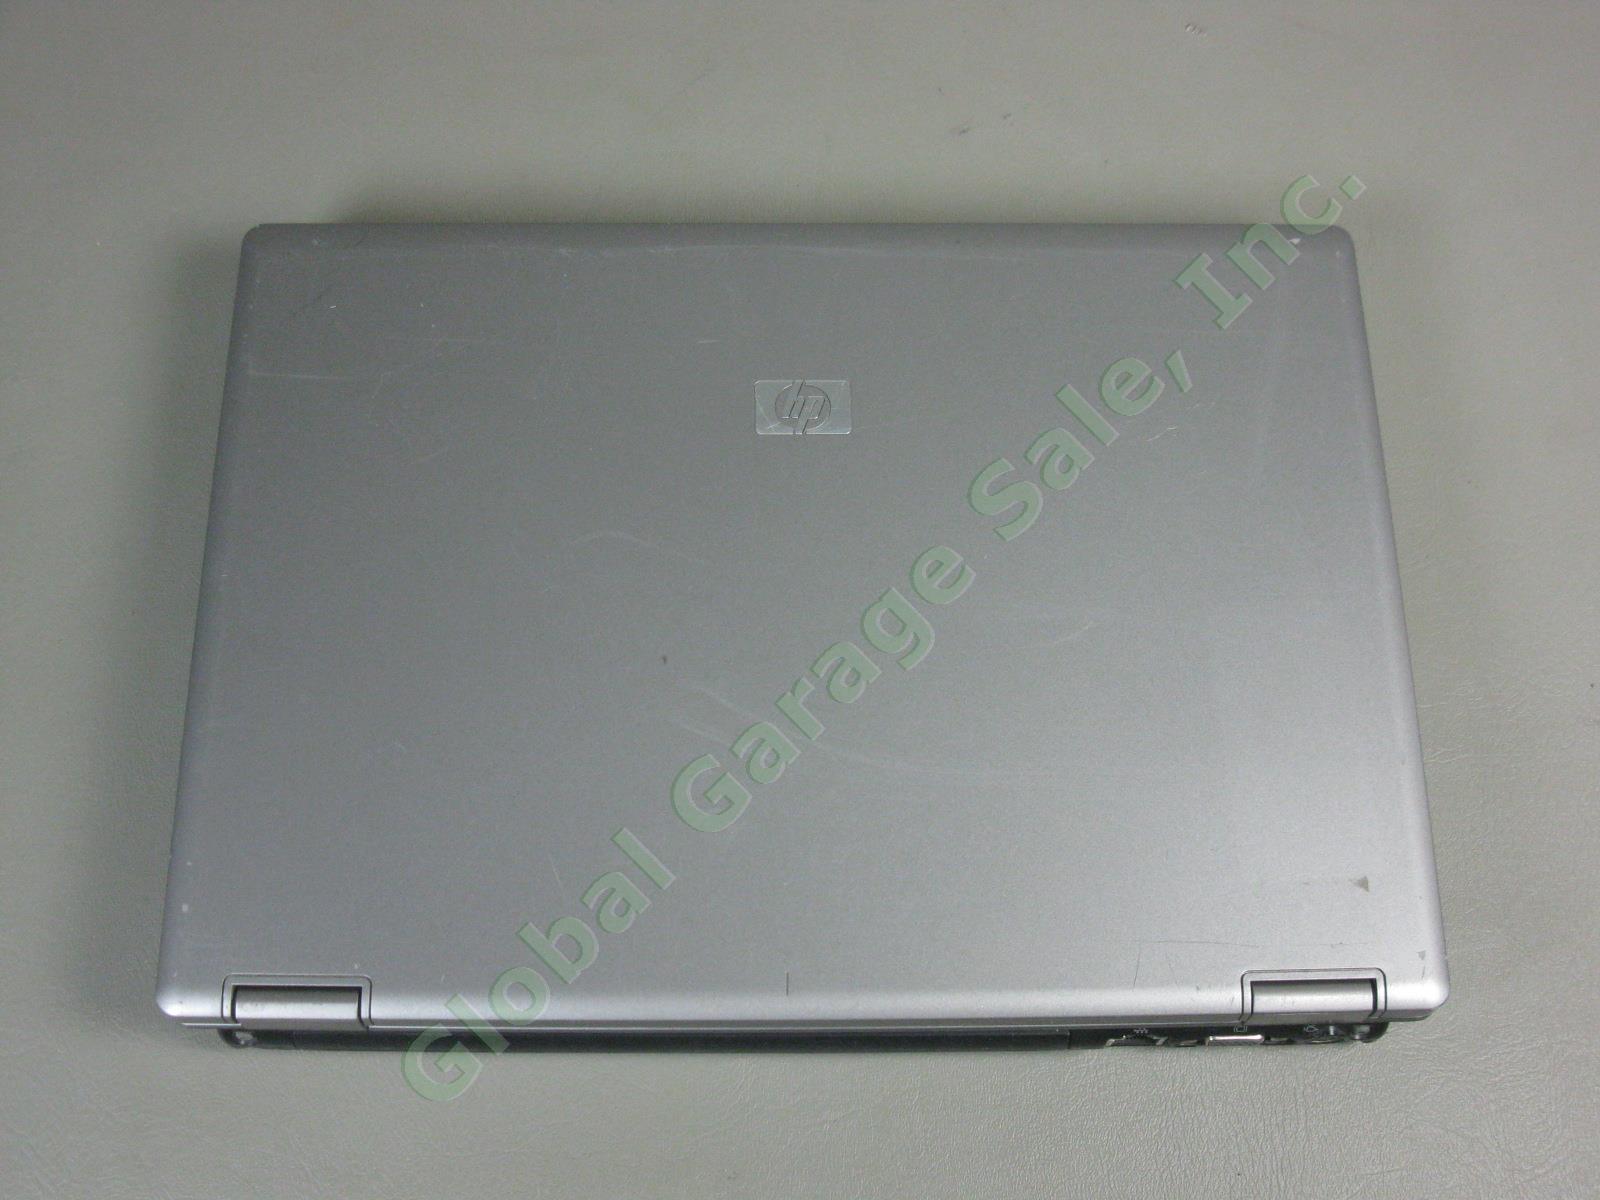 HP 6530b Laptop Computer Intel 2.26GHz 4GB RAM 160GB 14.1" Windows 7 Ultimate 6